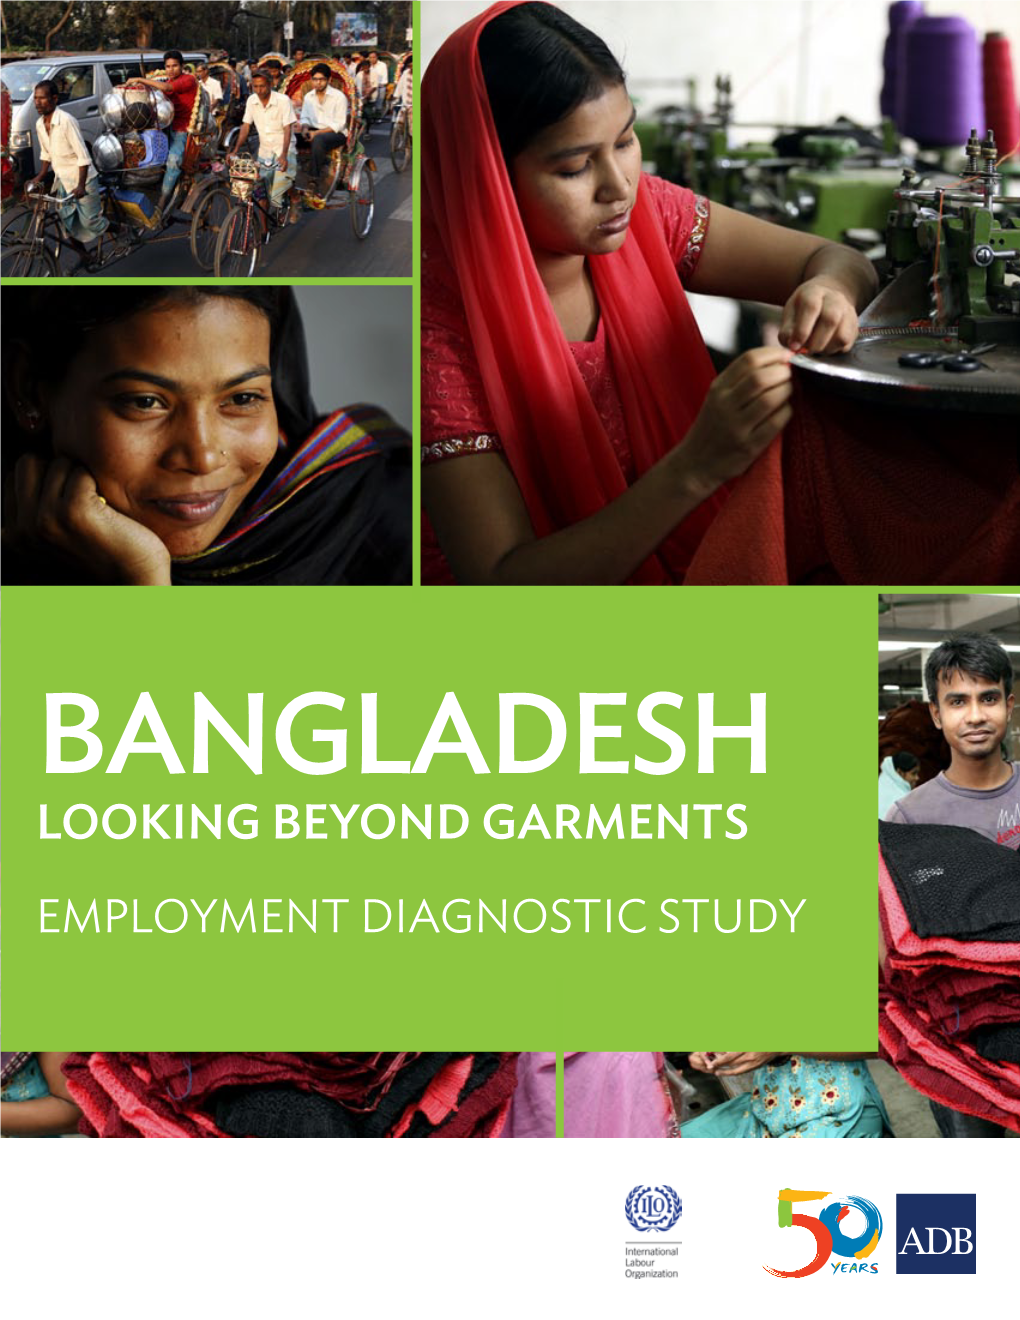 Bangladesh: Looking Beyond Garments